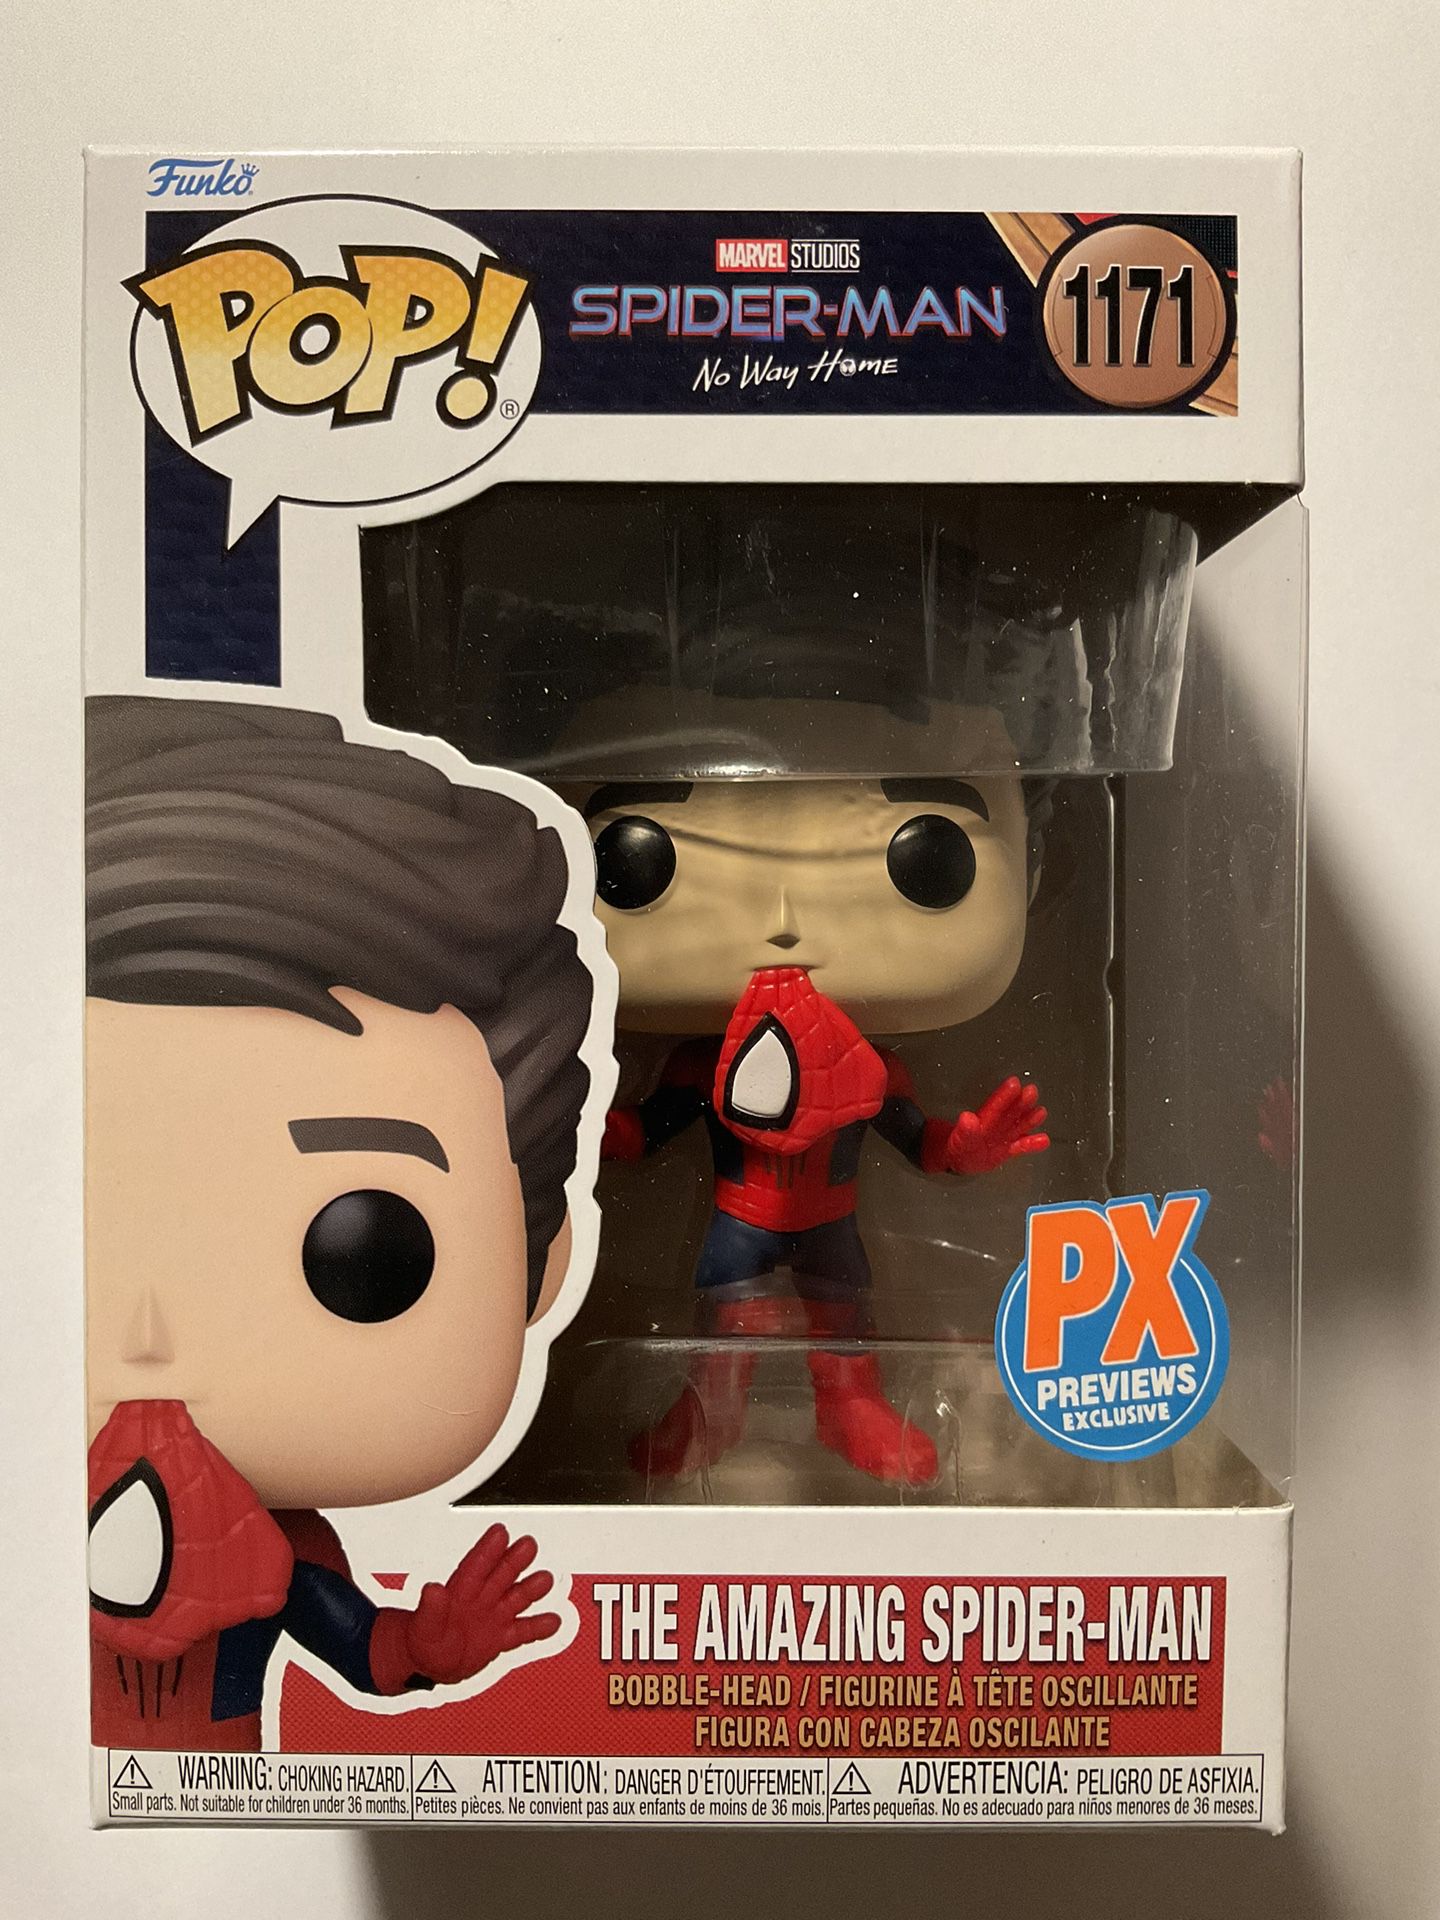 The Amazing Spider man Funko Pop 